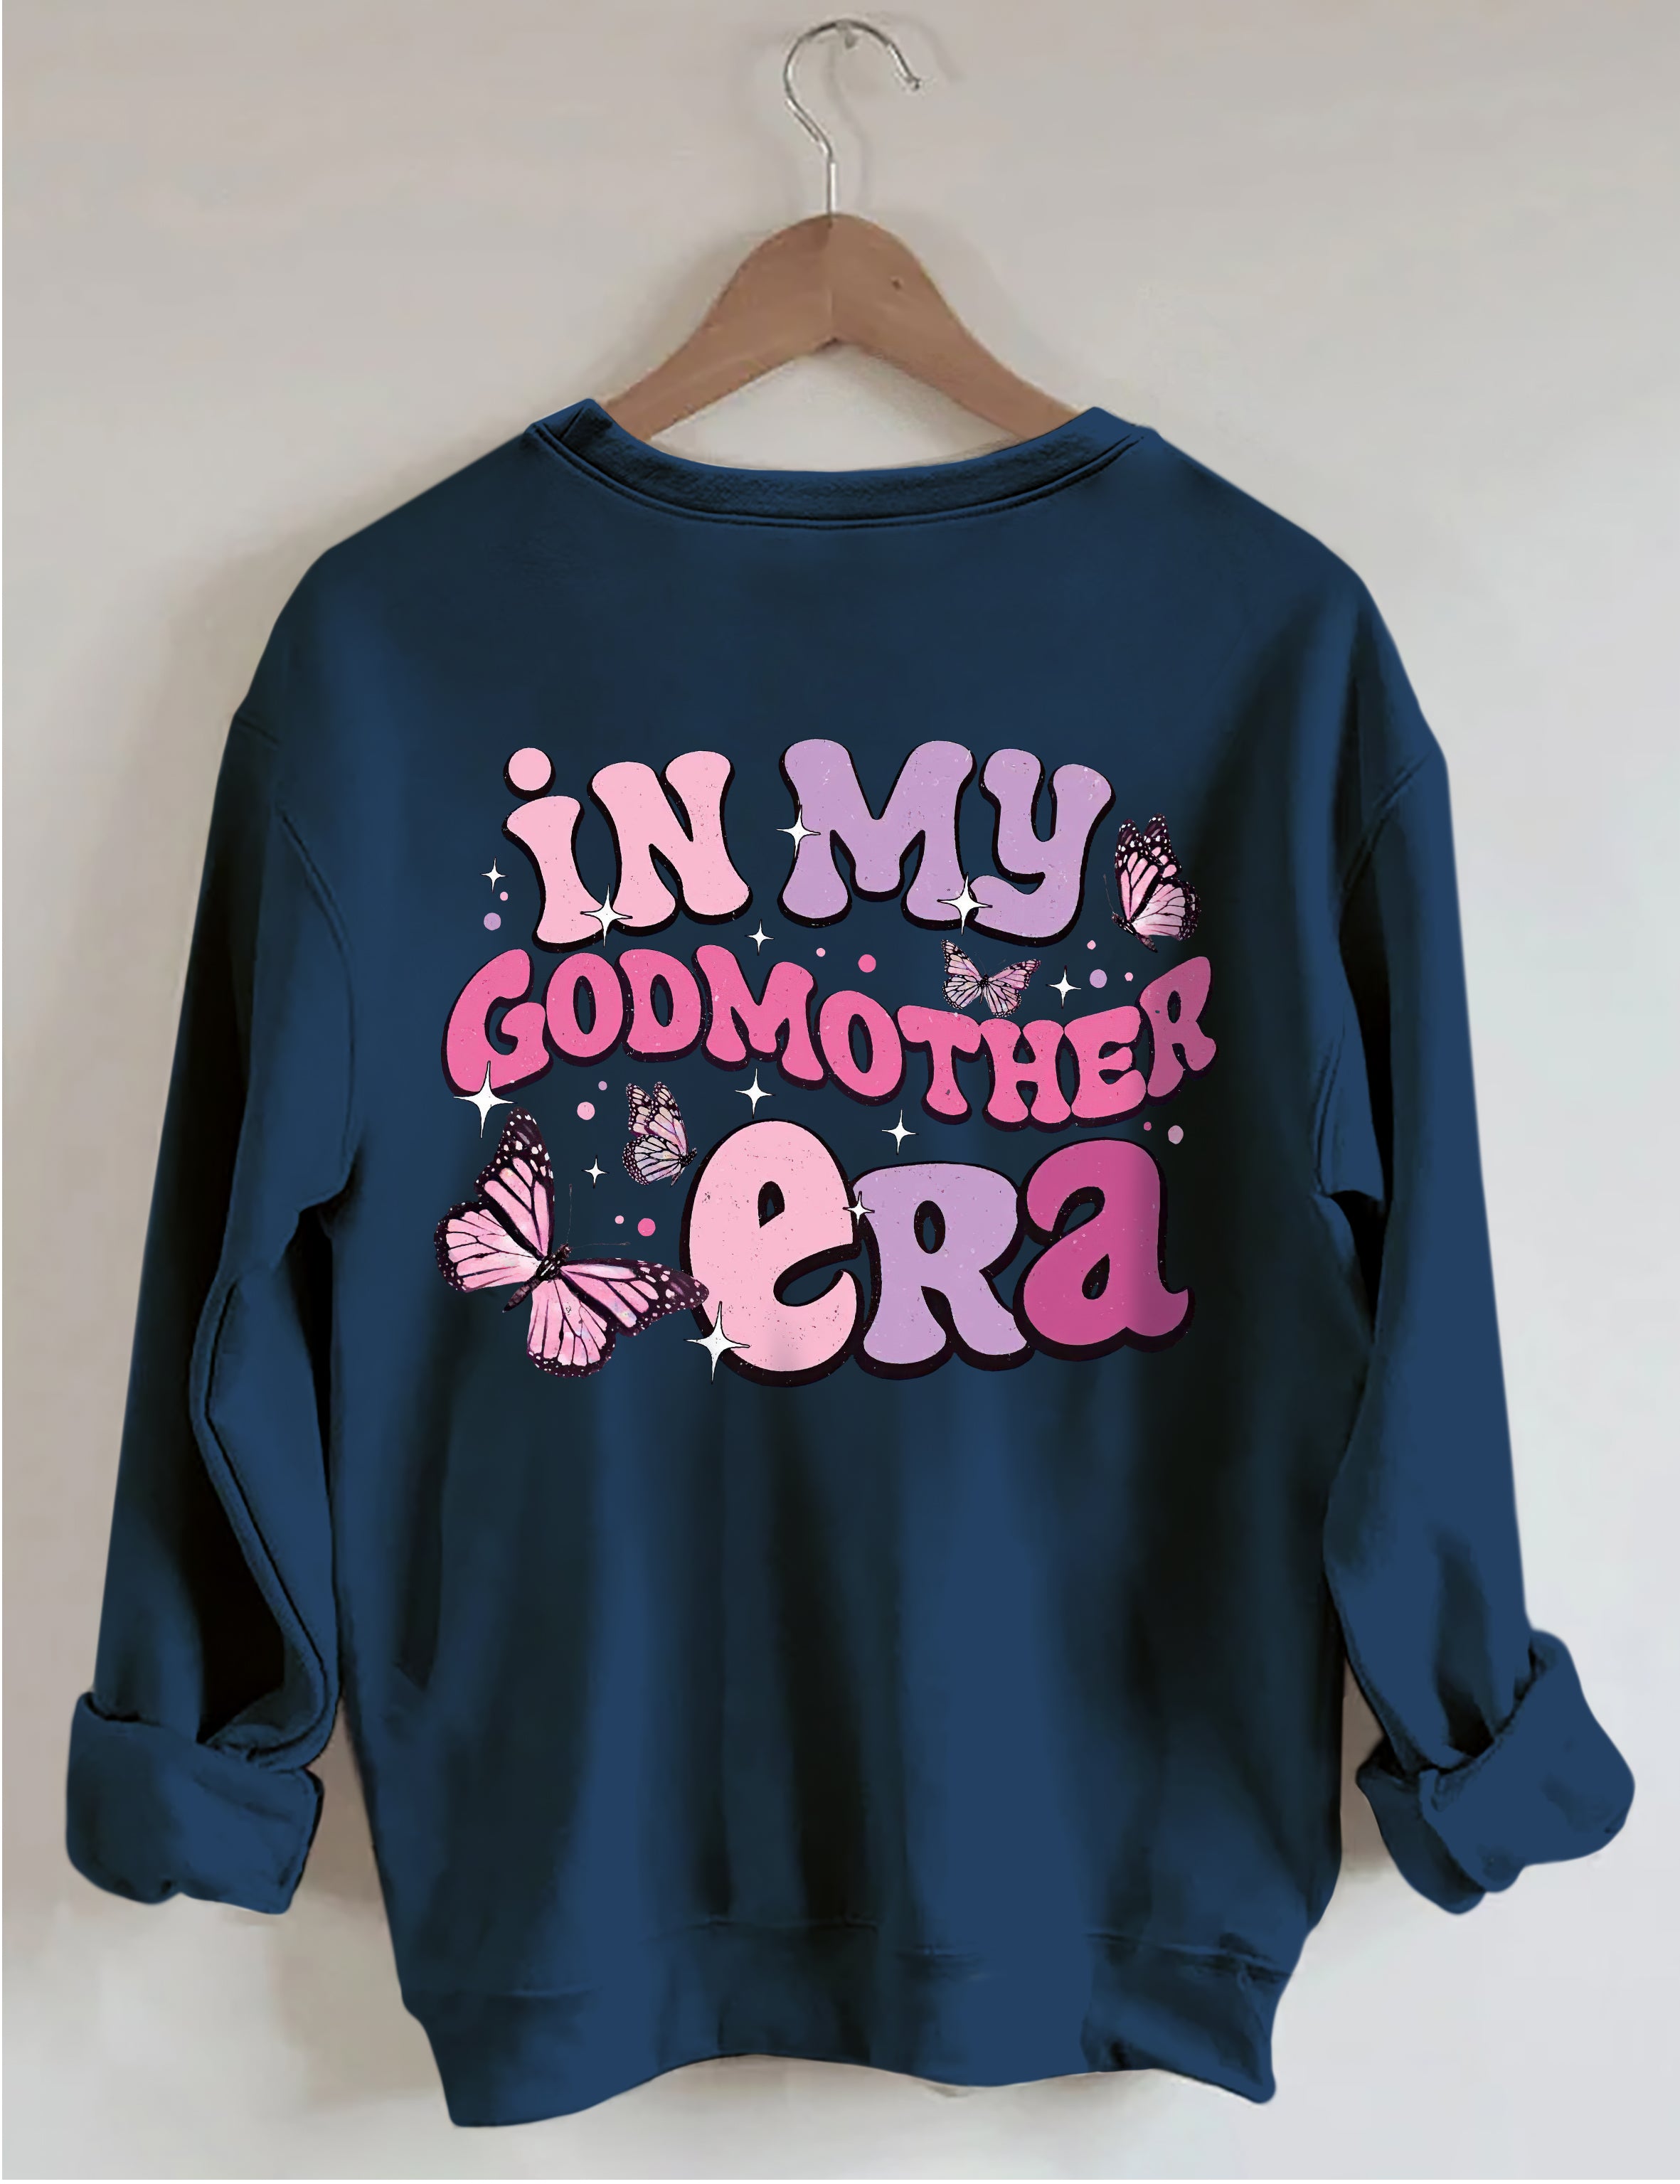 In My Godmother Era Sweatshirt